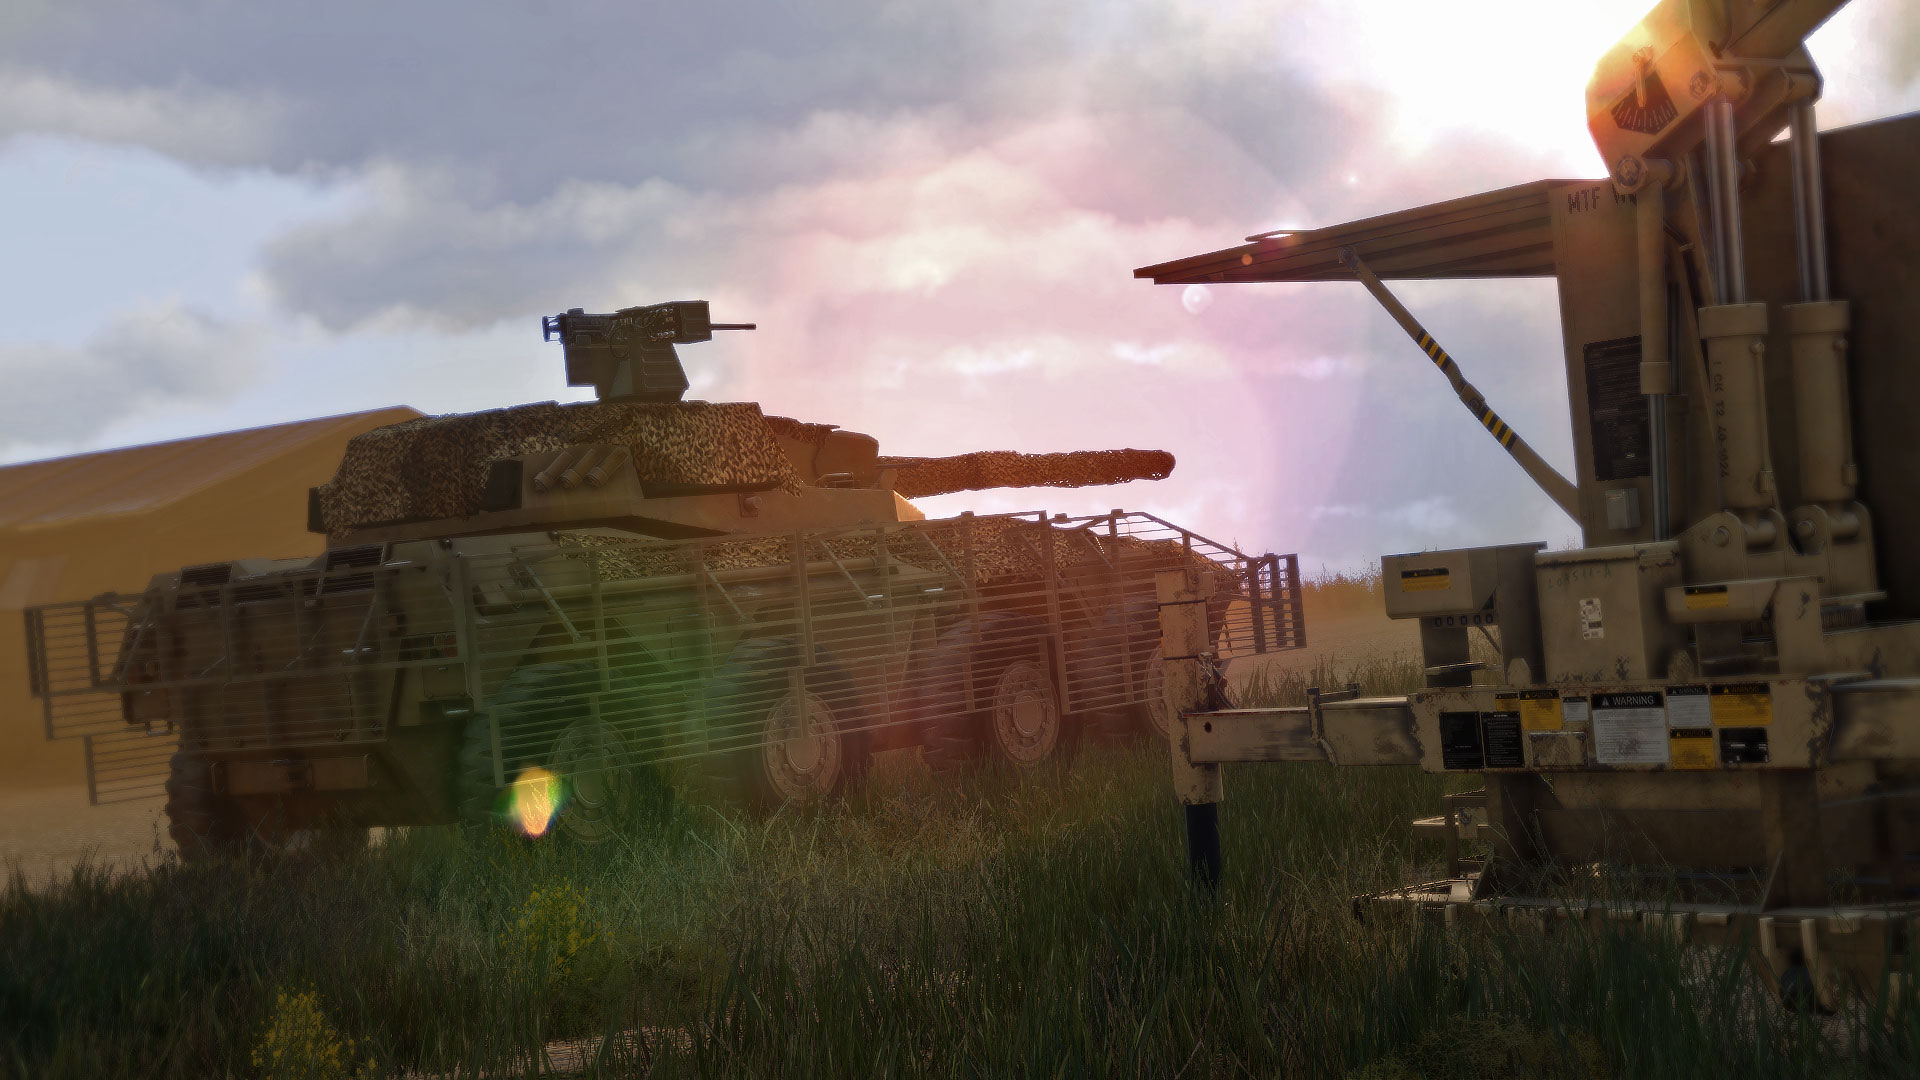 arma 3 ww2 tank battle